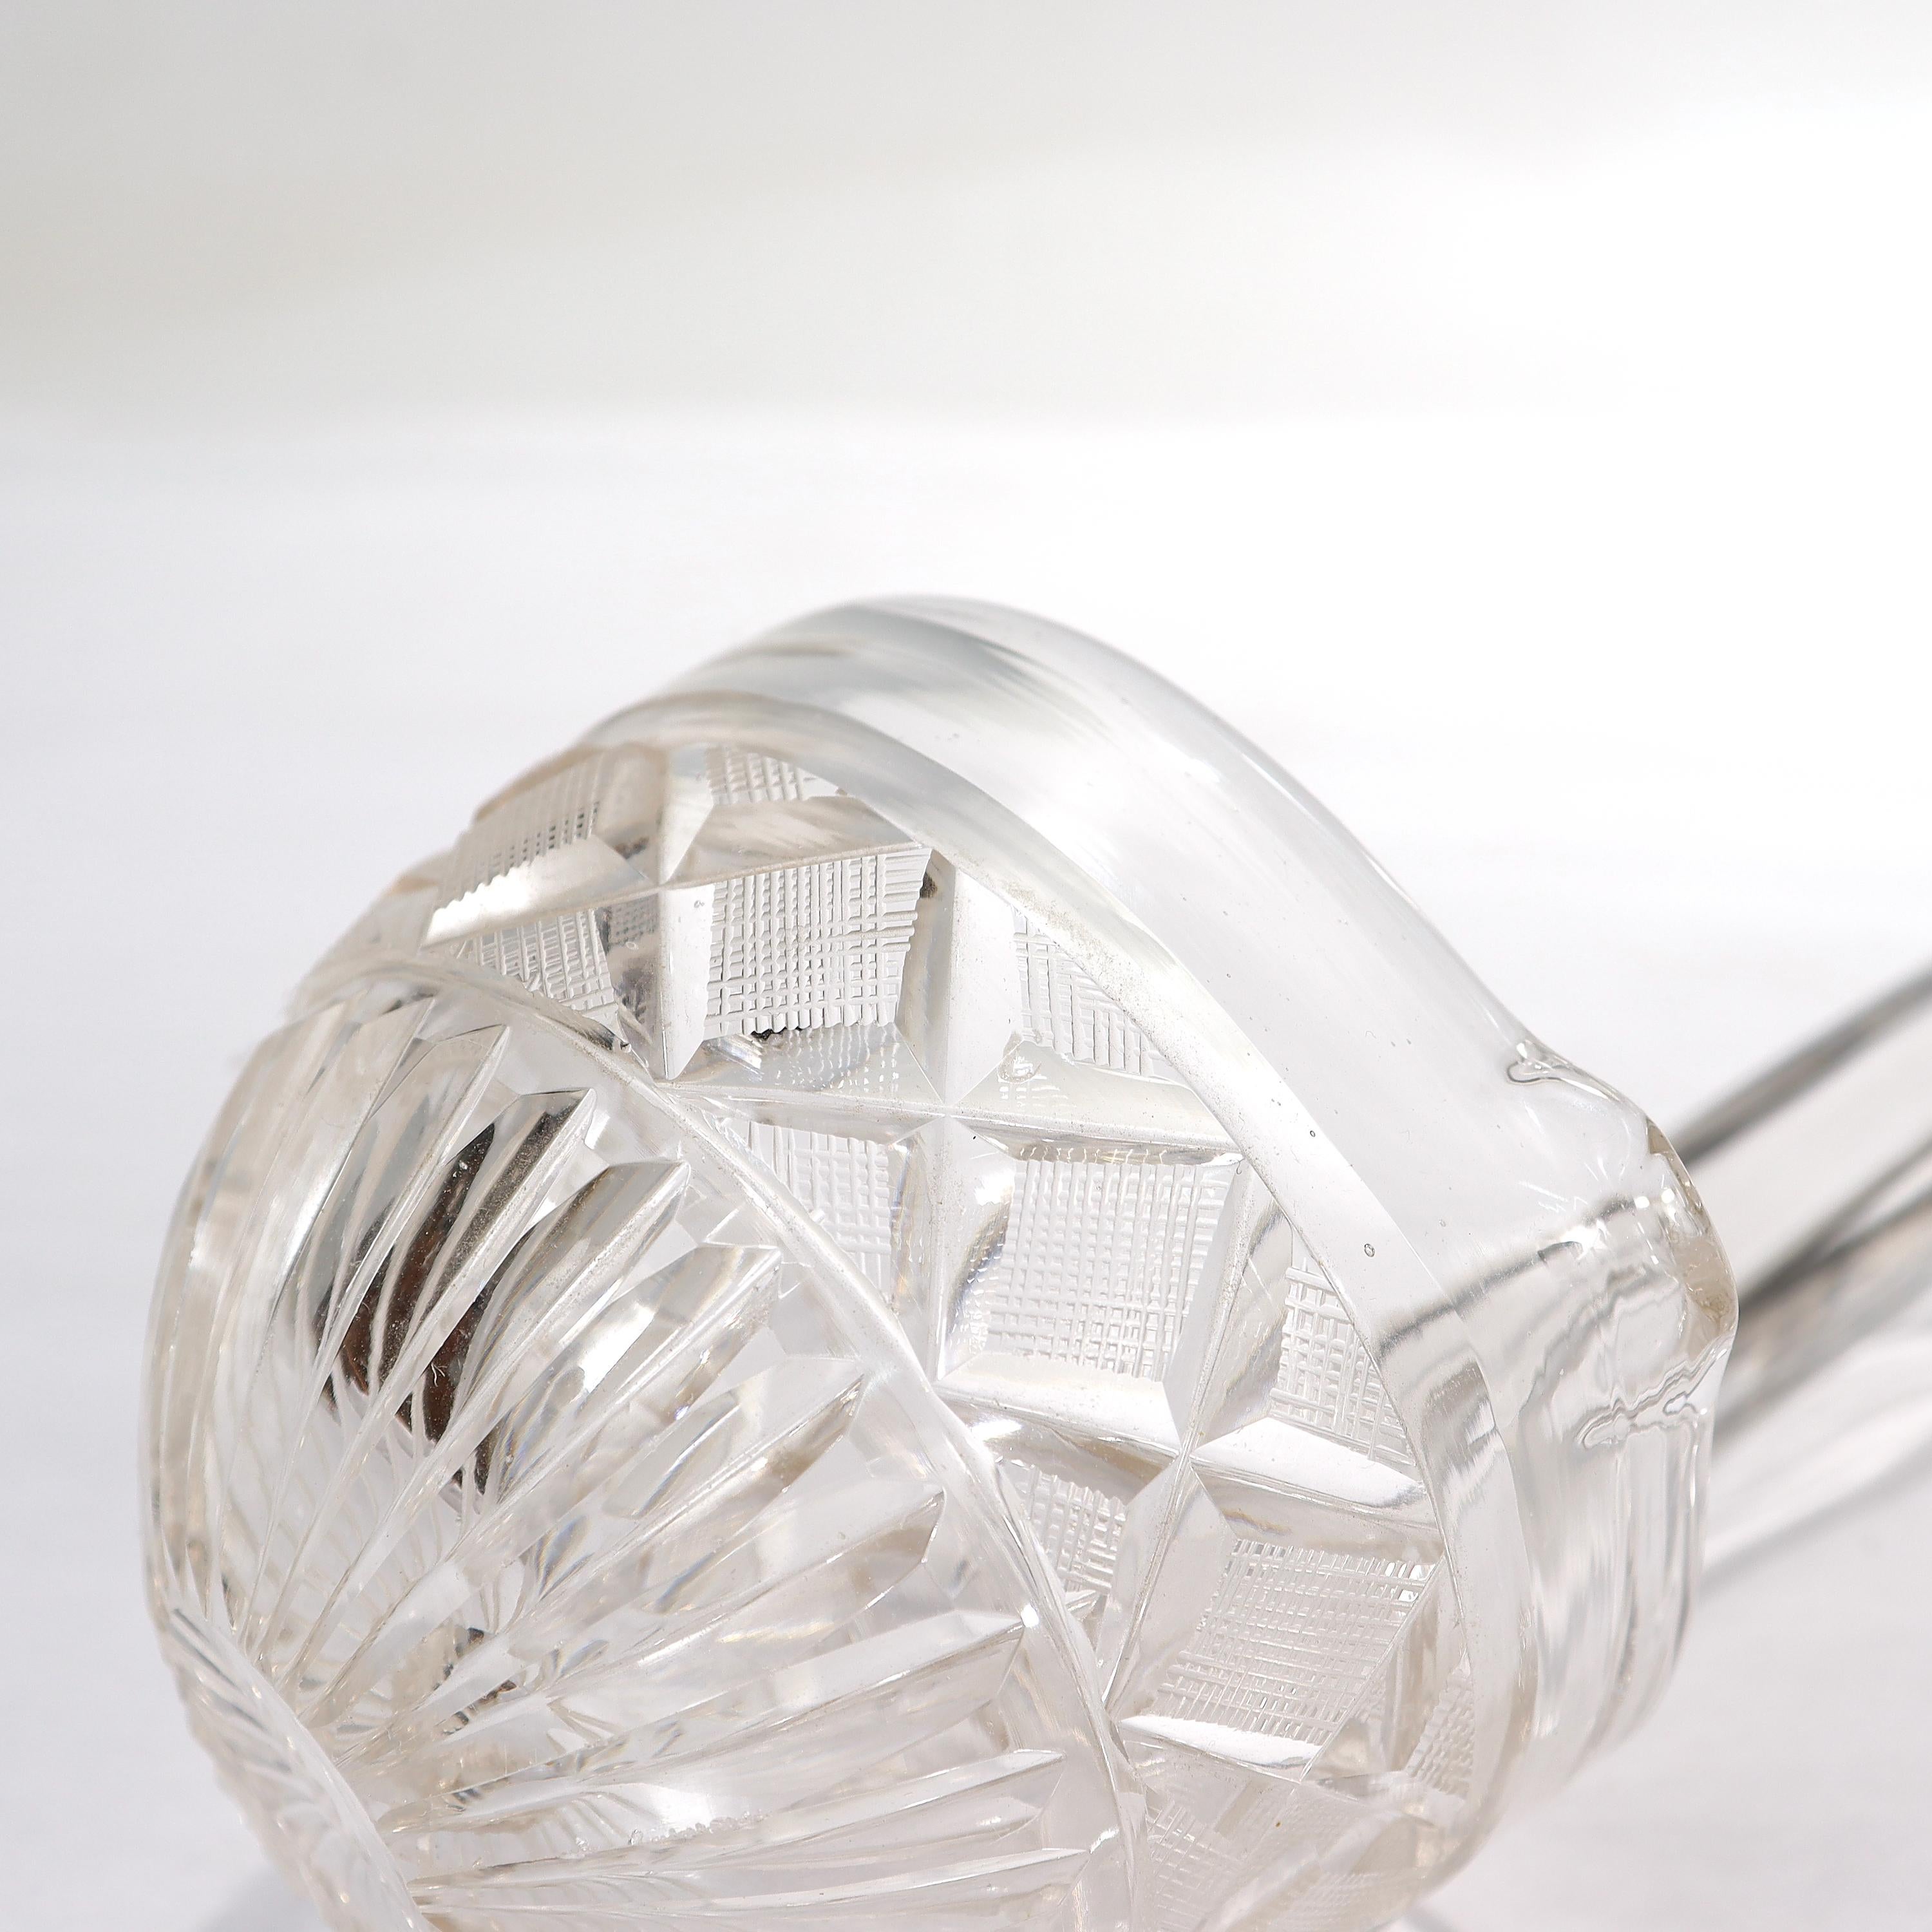 Rare Antique 19th Century Cut Glass Punch Ladle For Sale 3